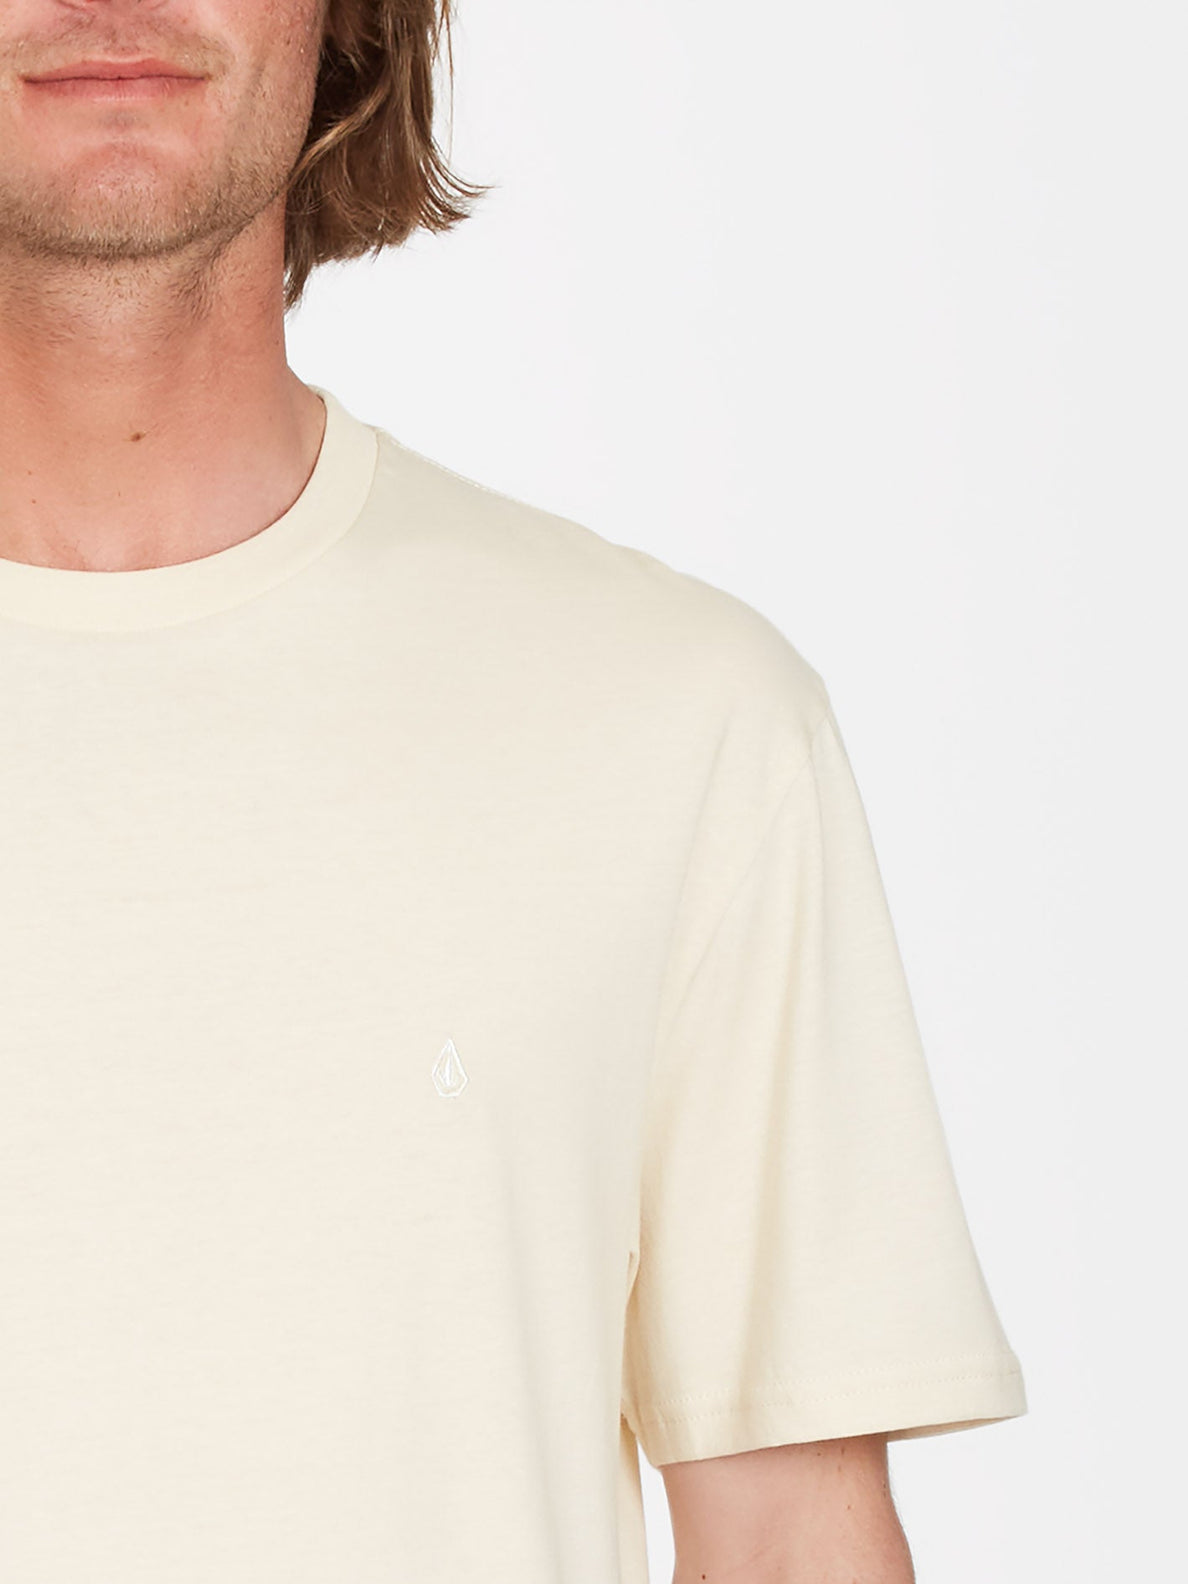 Camiseta Volcom Stone Blanks Whitecap Grey | Camisetas de hombre | Camisetas manga corta de hombre | Volcom Shop | surfdevils.com